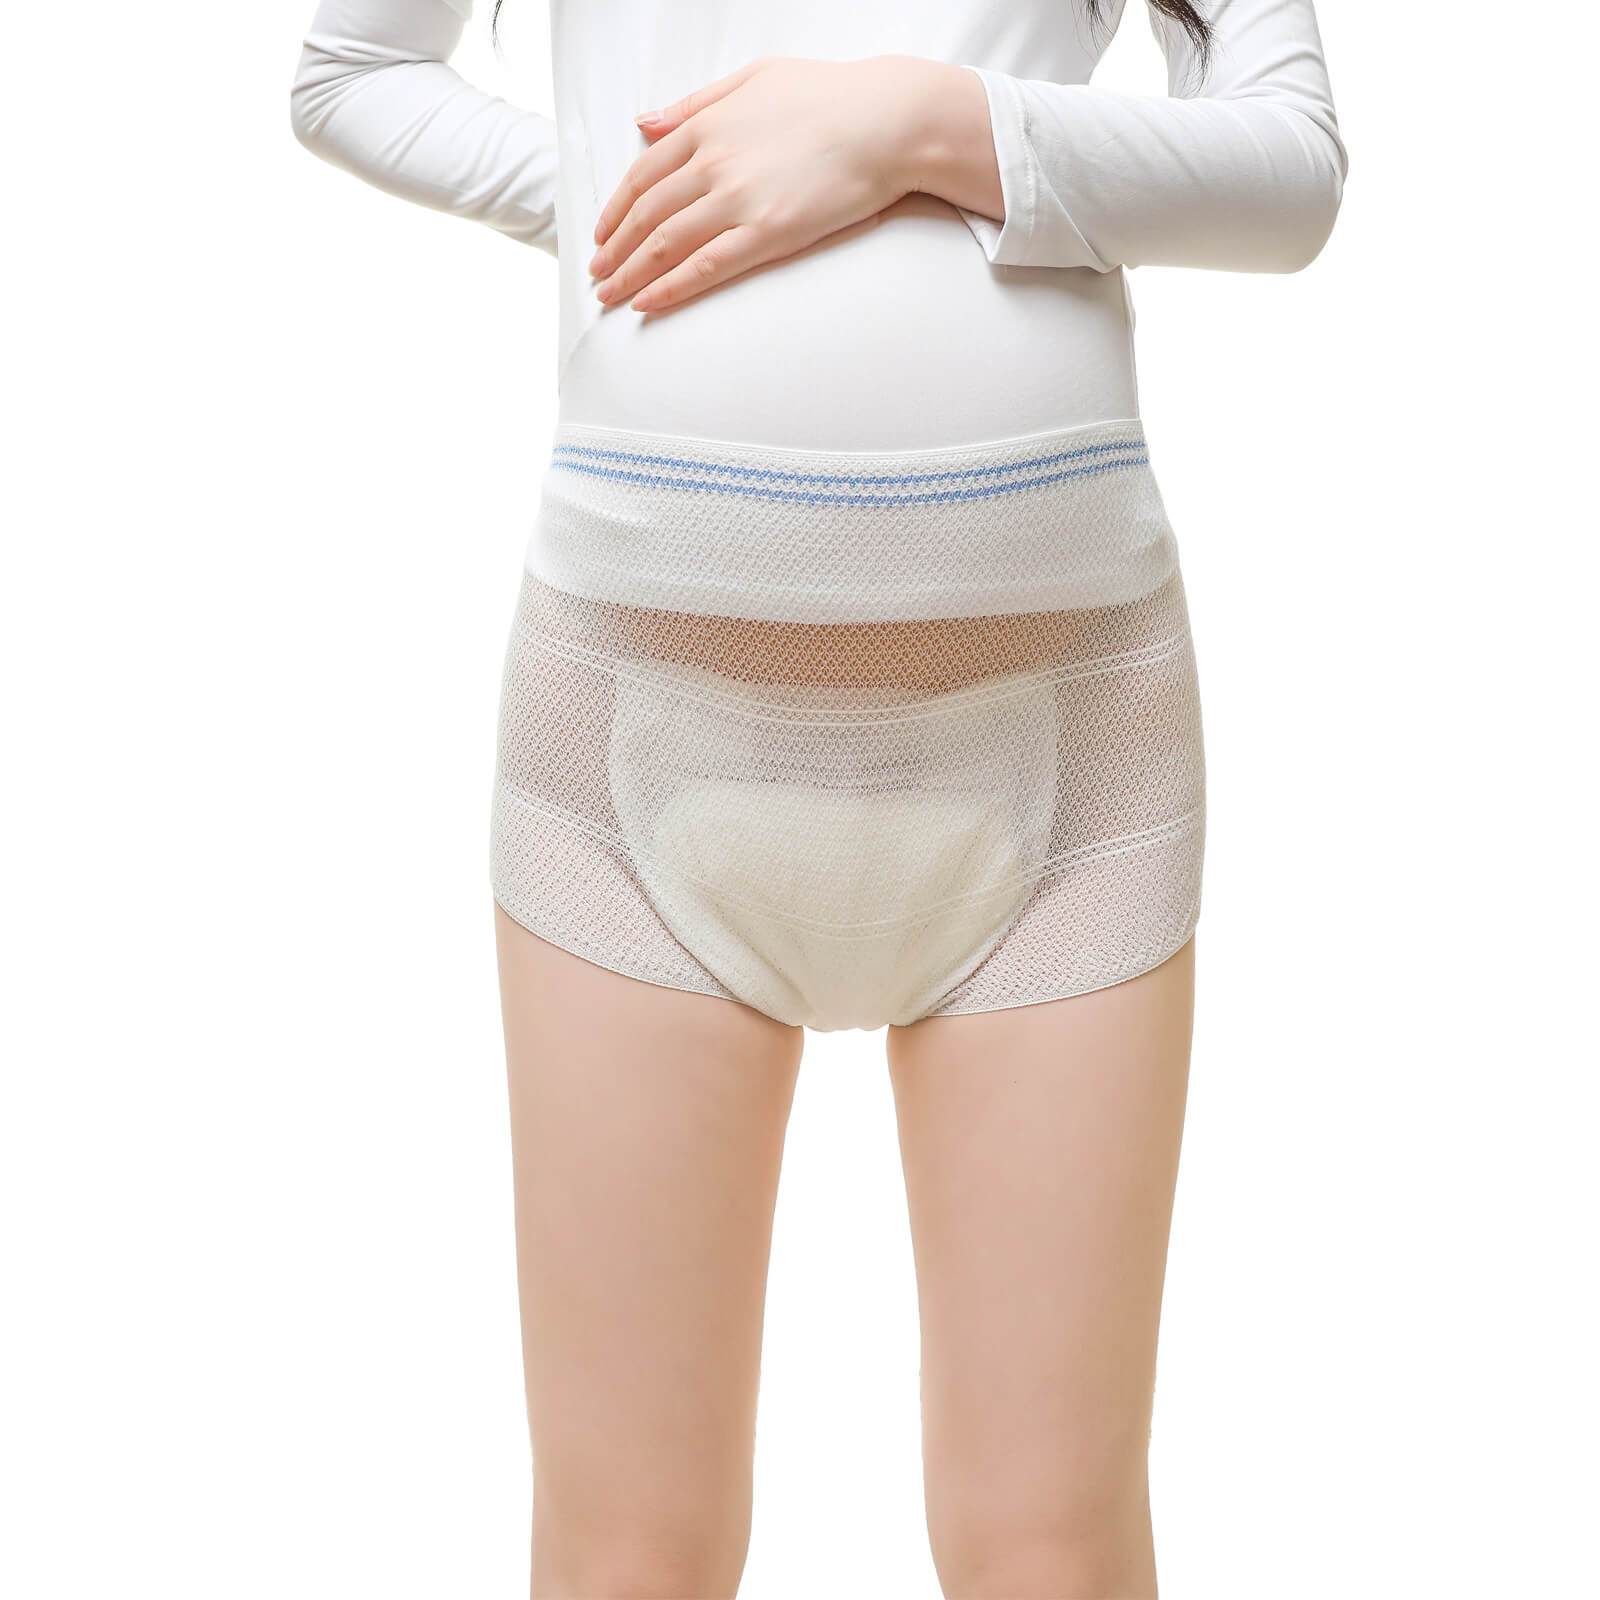 Reusable Postpartum Underwear Pregnancy Panties Incontienece Briefs –  CARERSPK